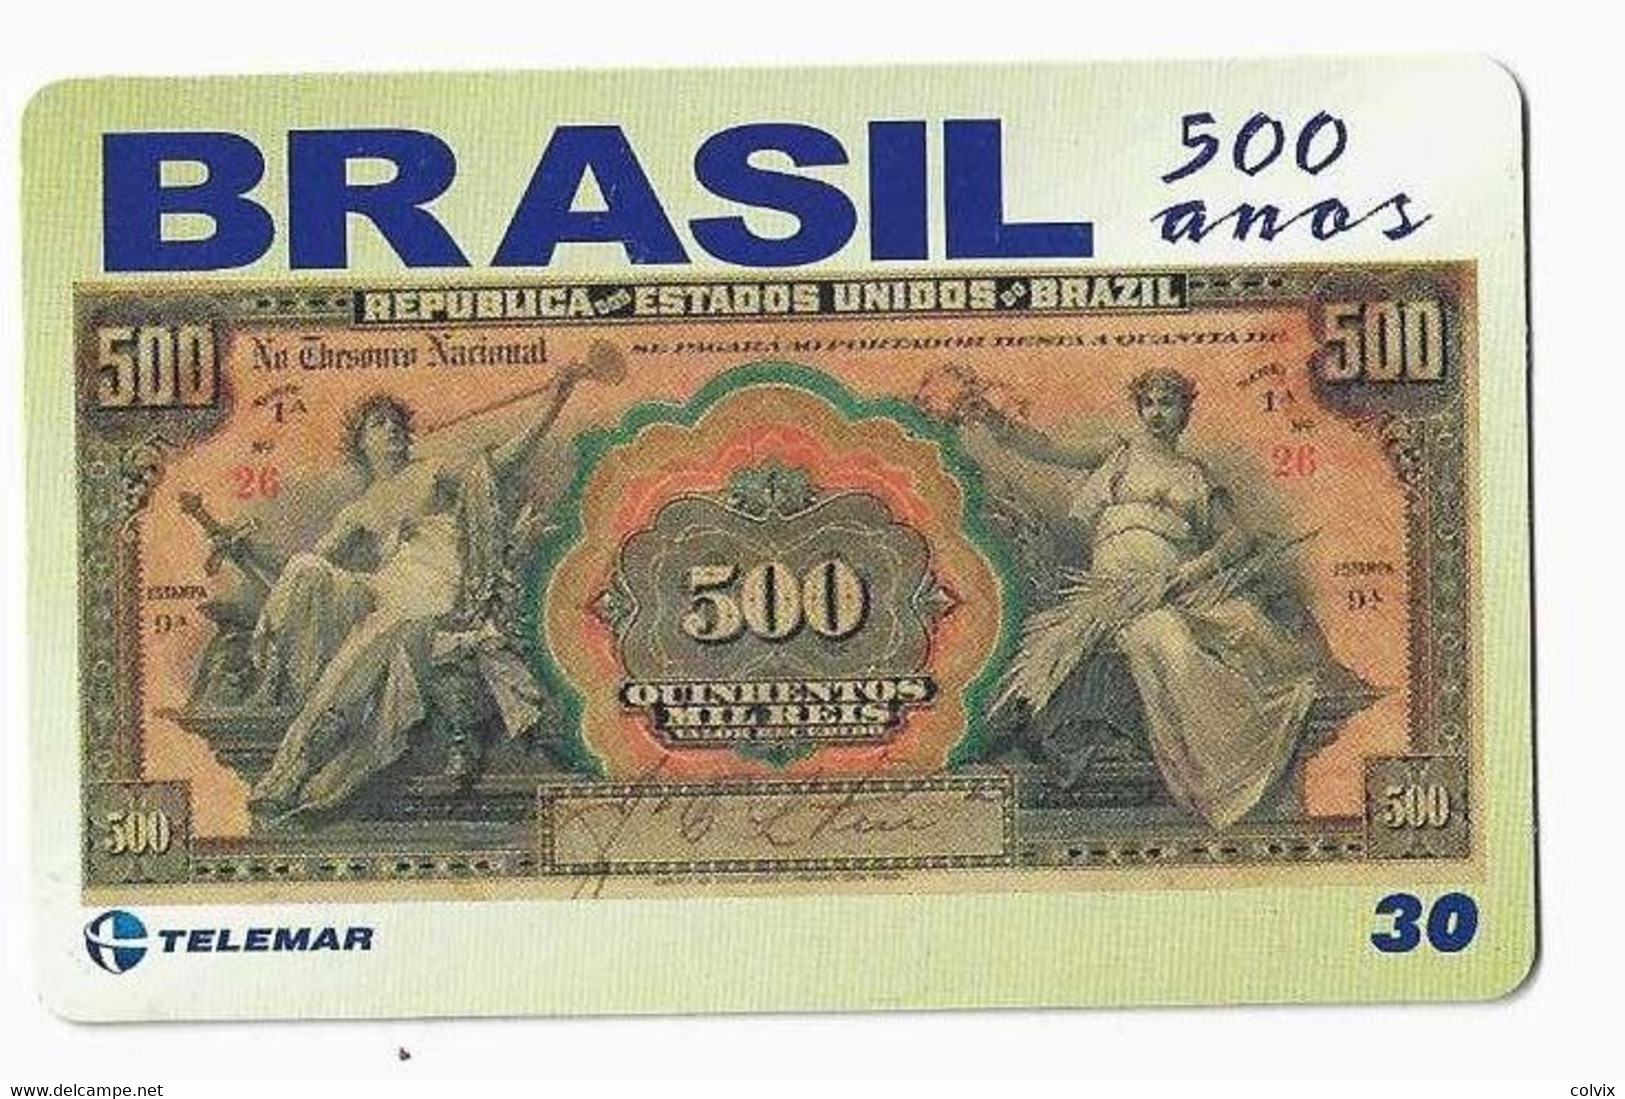 BRESIL TELECARTE BILLET DE BANQUE 1908 - Stamps & Coins